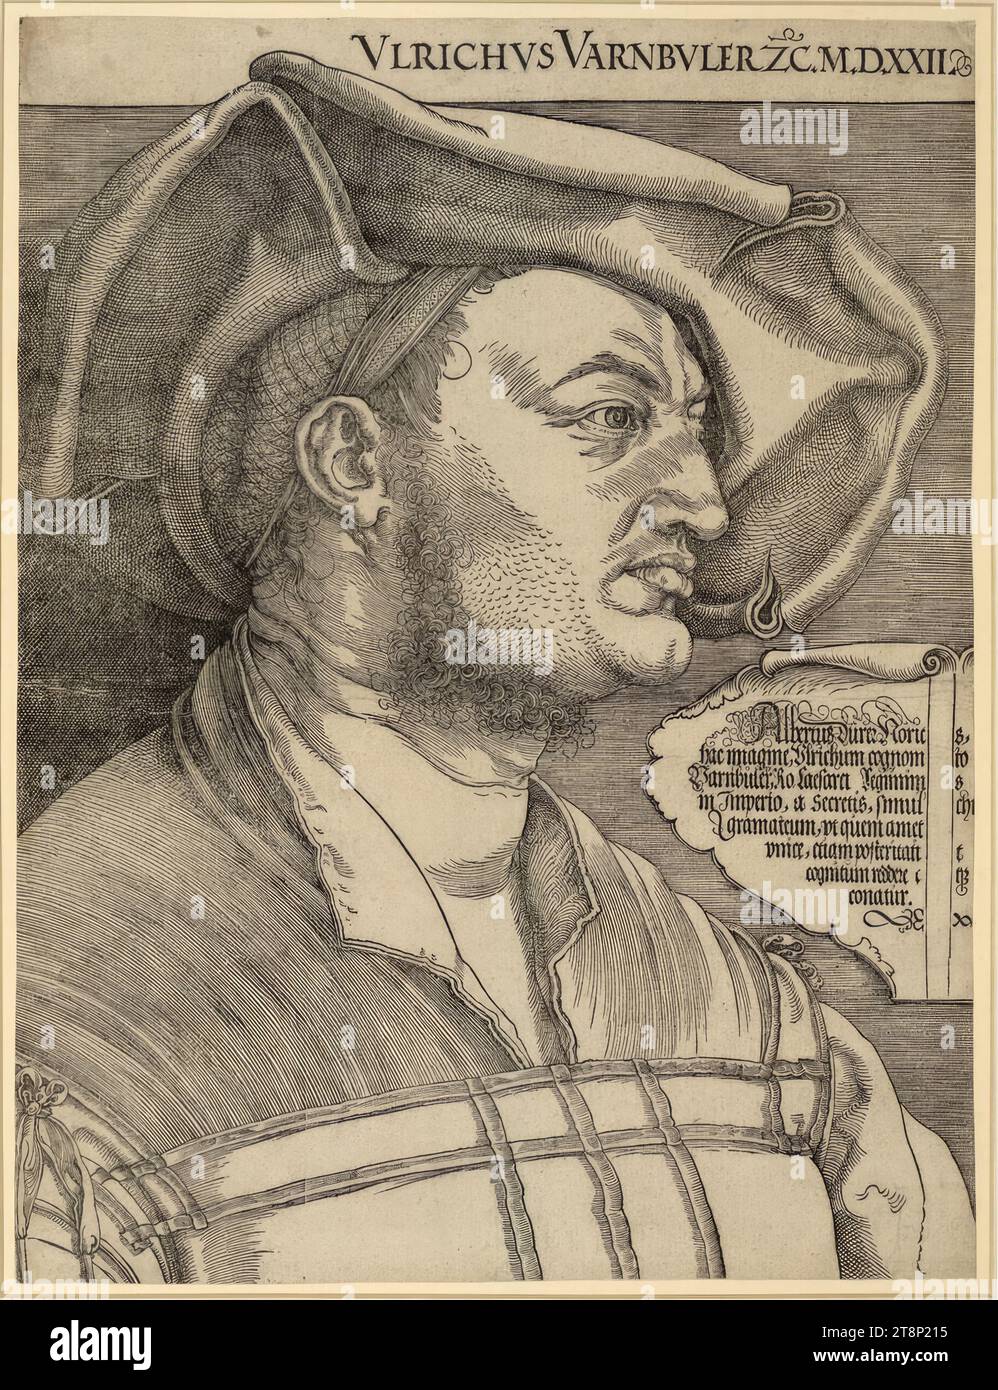 Ritratto di Ulrich Varnbüler, Albrecht Dürer (Norimberga 1471 - 1528 Norimberga), 1522, stampa, taglio del legno; foglio rifilato, foglio: 42,7 x 32,4 cm, r.o. 'VLRICHVS VARNBVLER ZC.M.D.XXII.'; M.r.: 'Albertus durer Noric[u]s, hac Imagine, Vlrichum cognom[en]to, Varnbuler, RO. Caesarei Regiminis, in Imperio, a Secretis, simul[ar]chi, gramateum, vt quem amet, vnice, etiam posteriati [vul]t/ cognitum reddere c[oler]eque, conatur.” (Albrecht Dürer di Norimberga vorrebbe usare questa foto per far conoscere ai posteri il segreto e capo scriba del governo imperiale romano, Ulrico Foto Stock